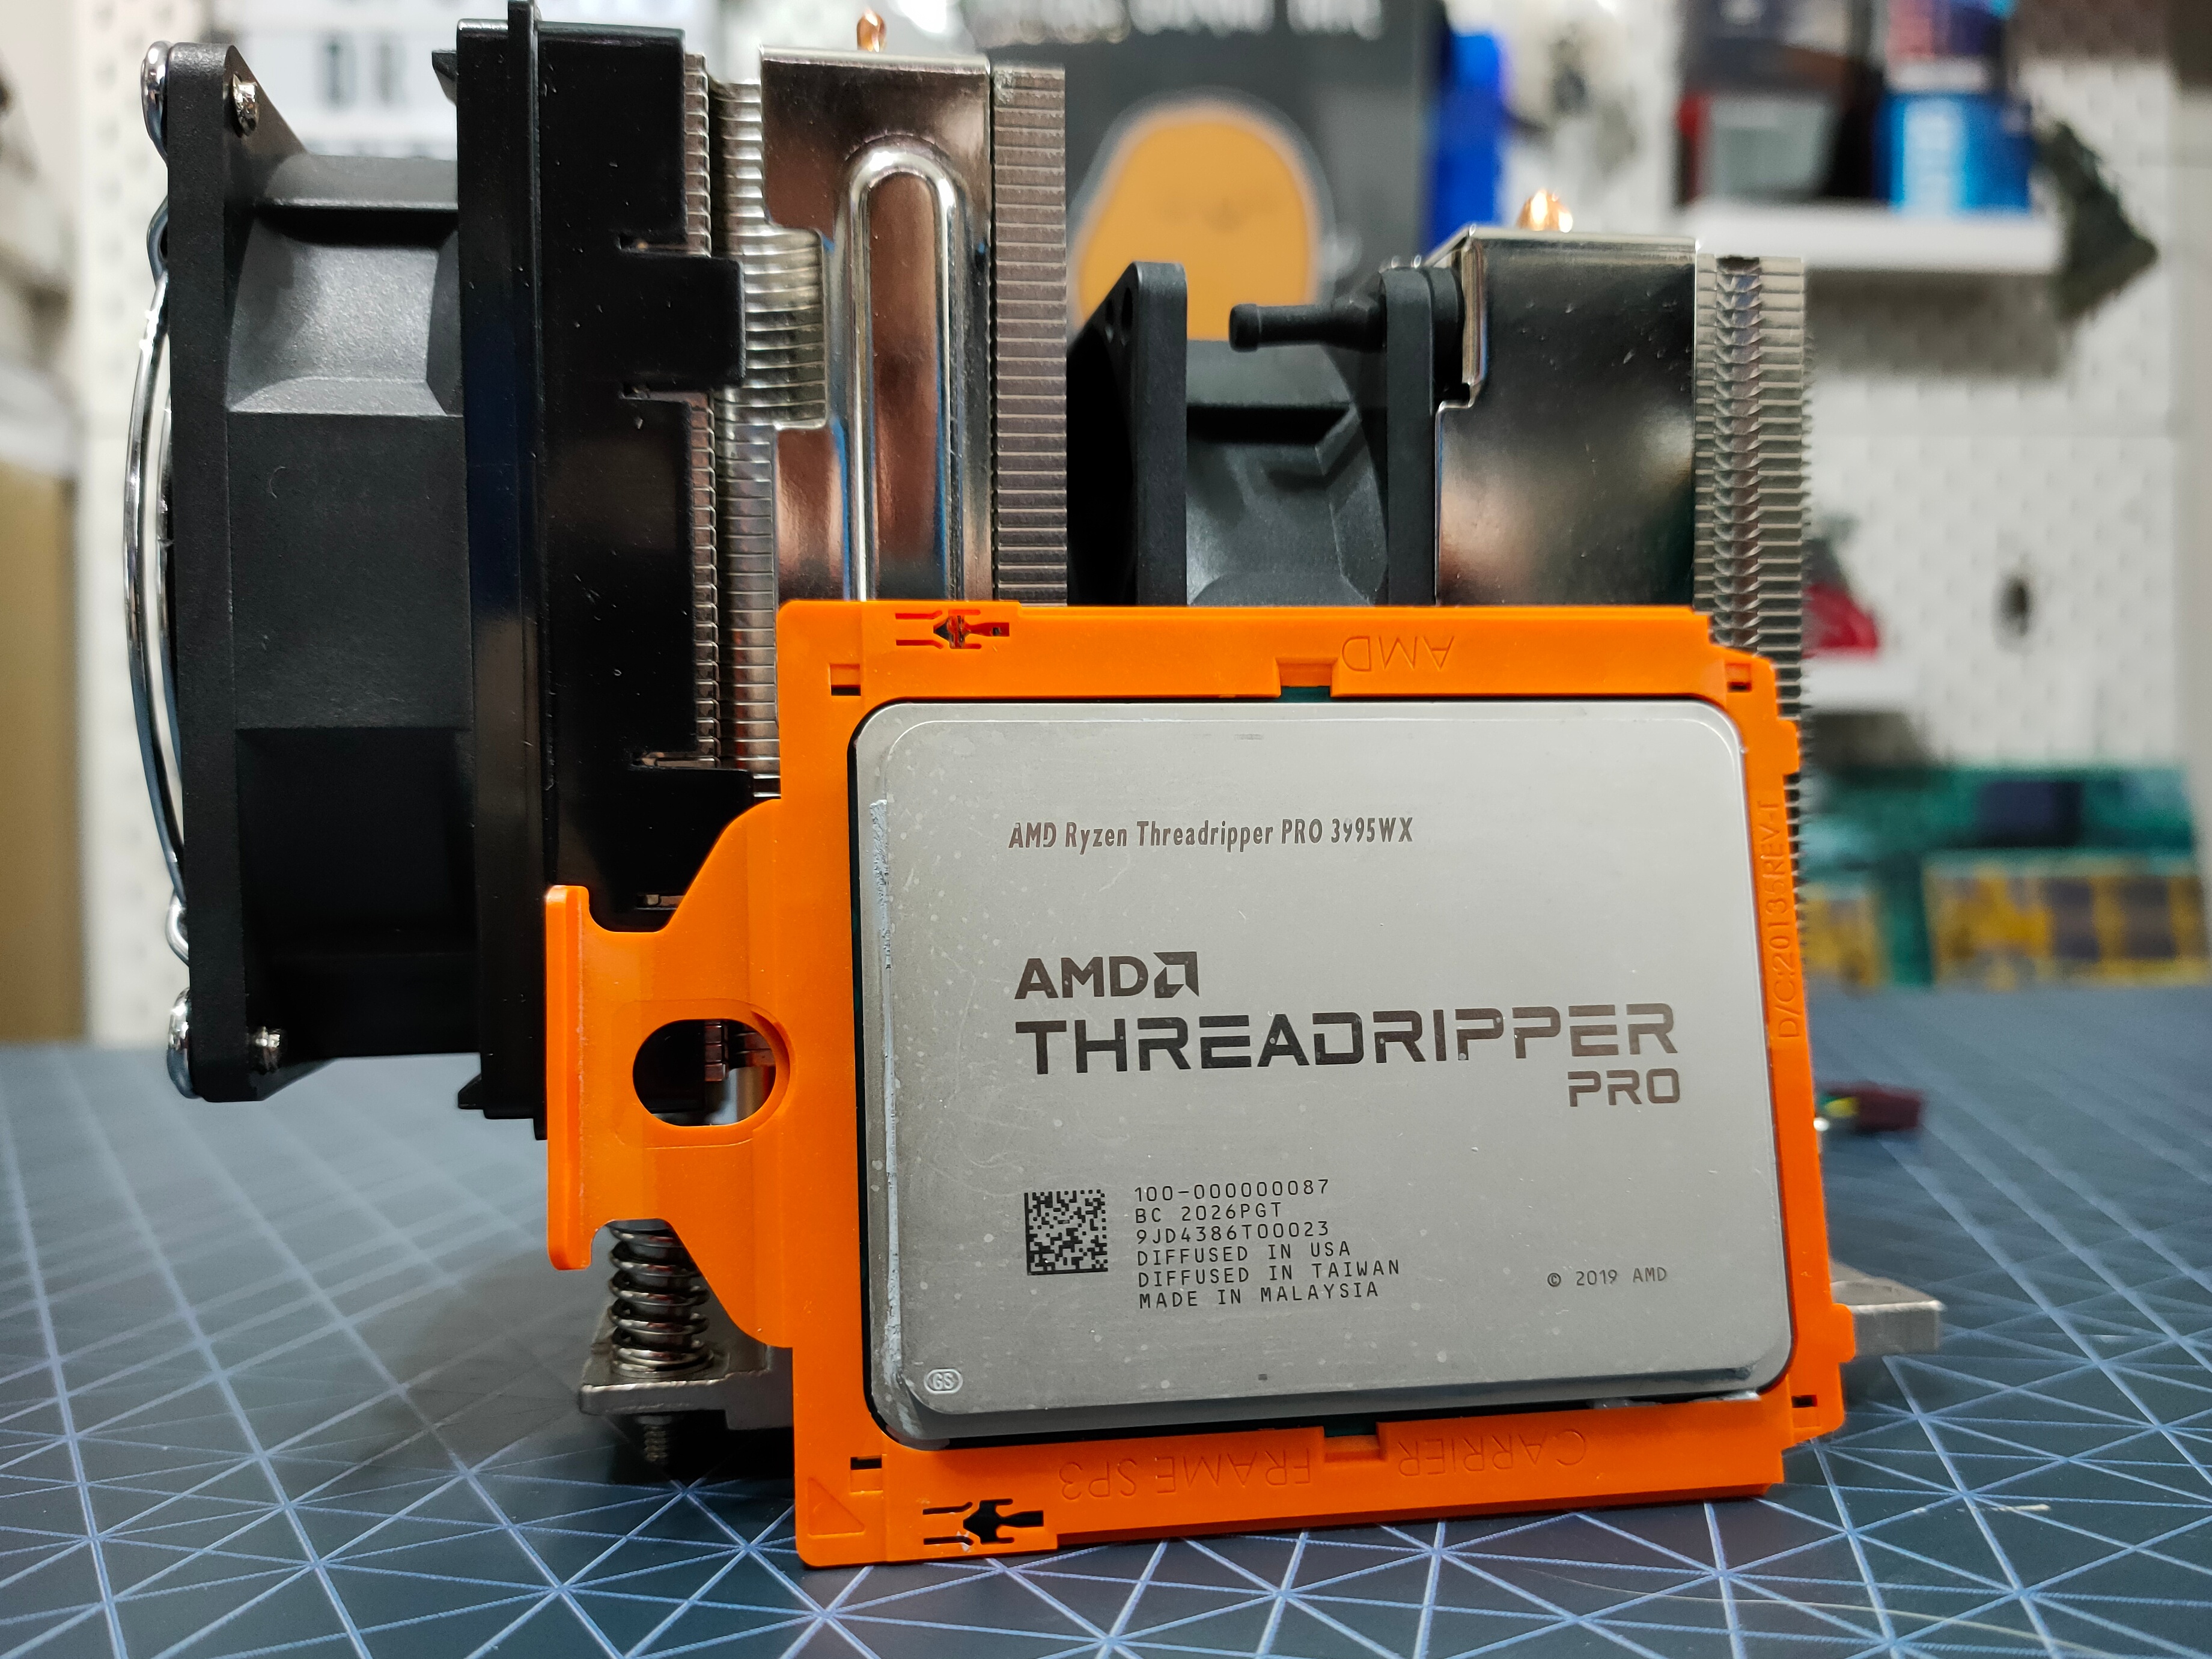 AMD Ryzen Threadripper Pro 5995WX WEPYC Review - Page 3 of 4